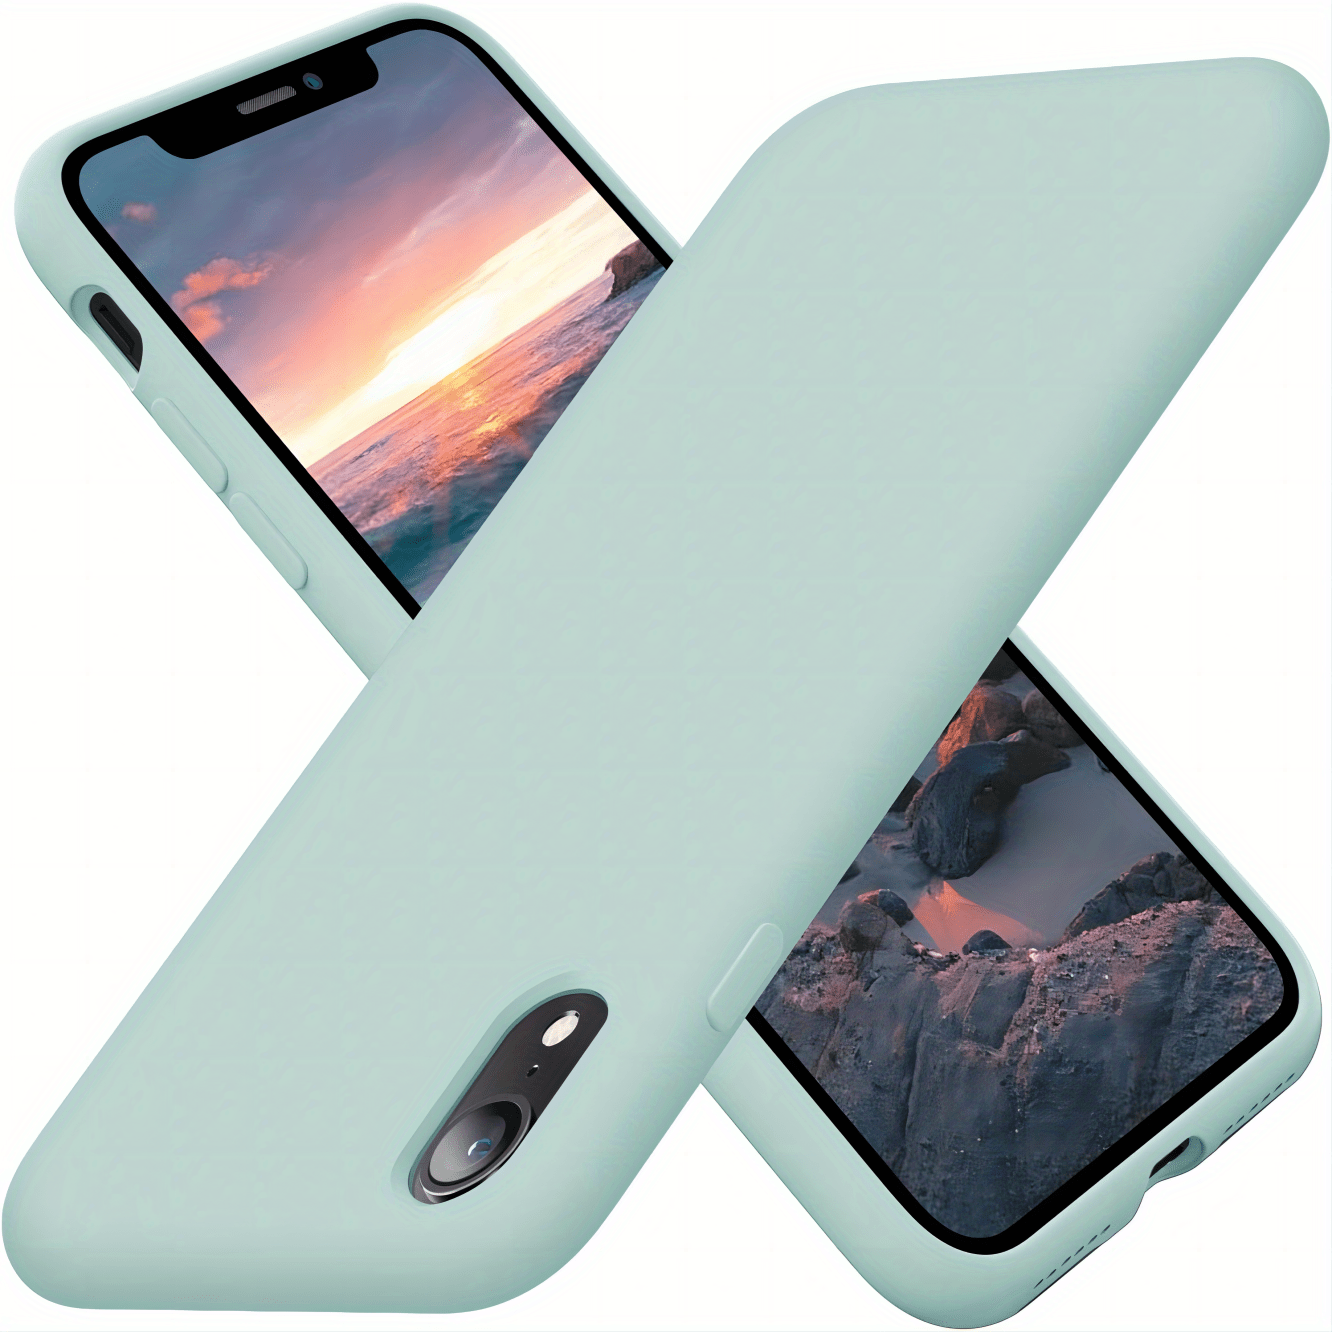 Funda silicona CALIDAD para iphone XR verde mar